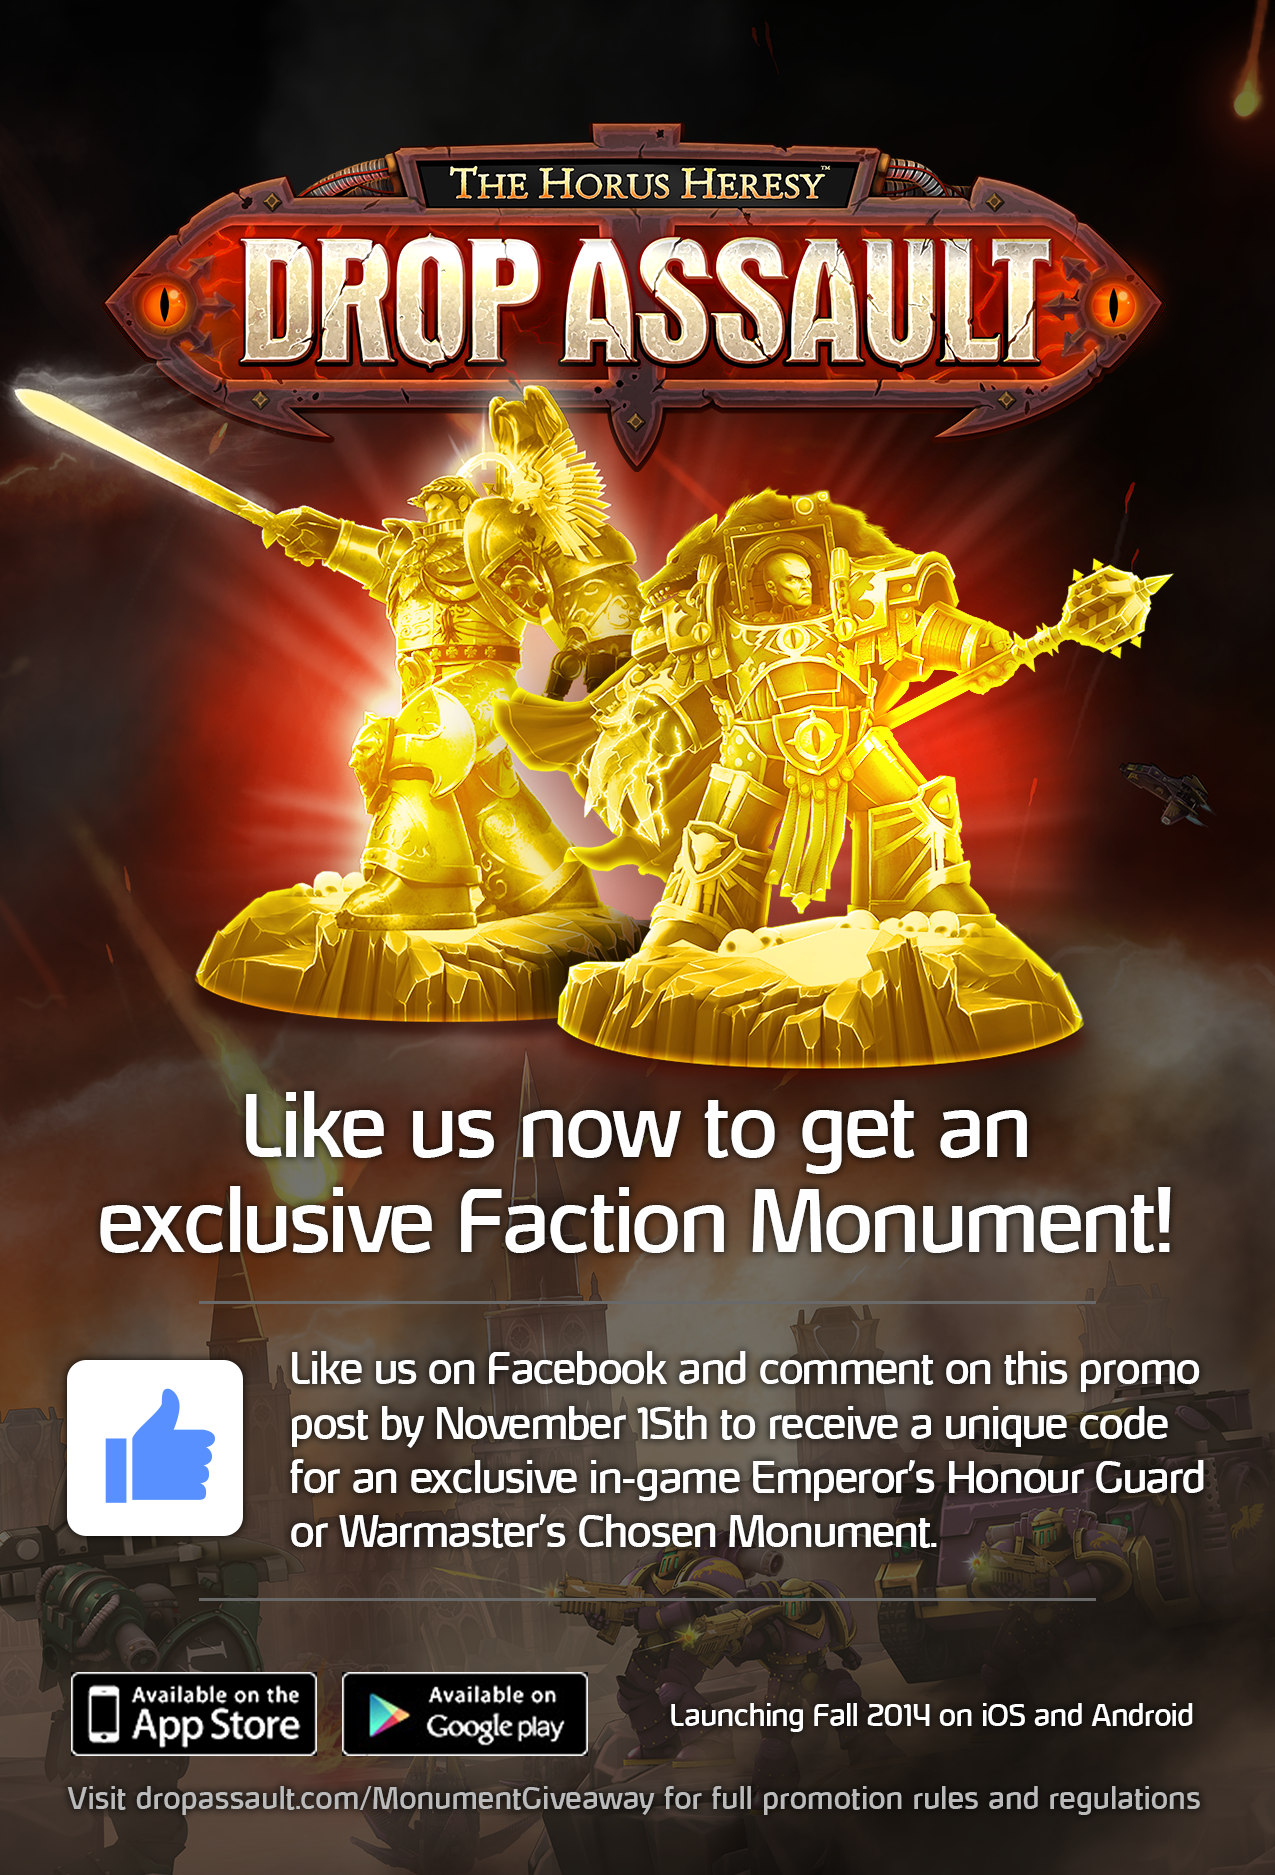 Horus Heresy: Drop Assault kicks off Monument Giveaway